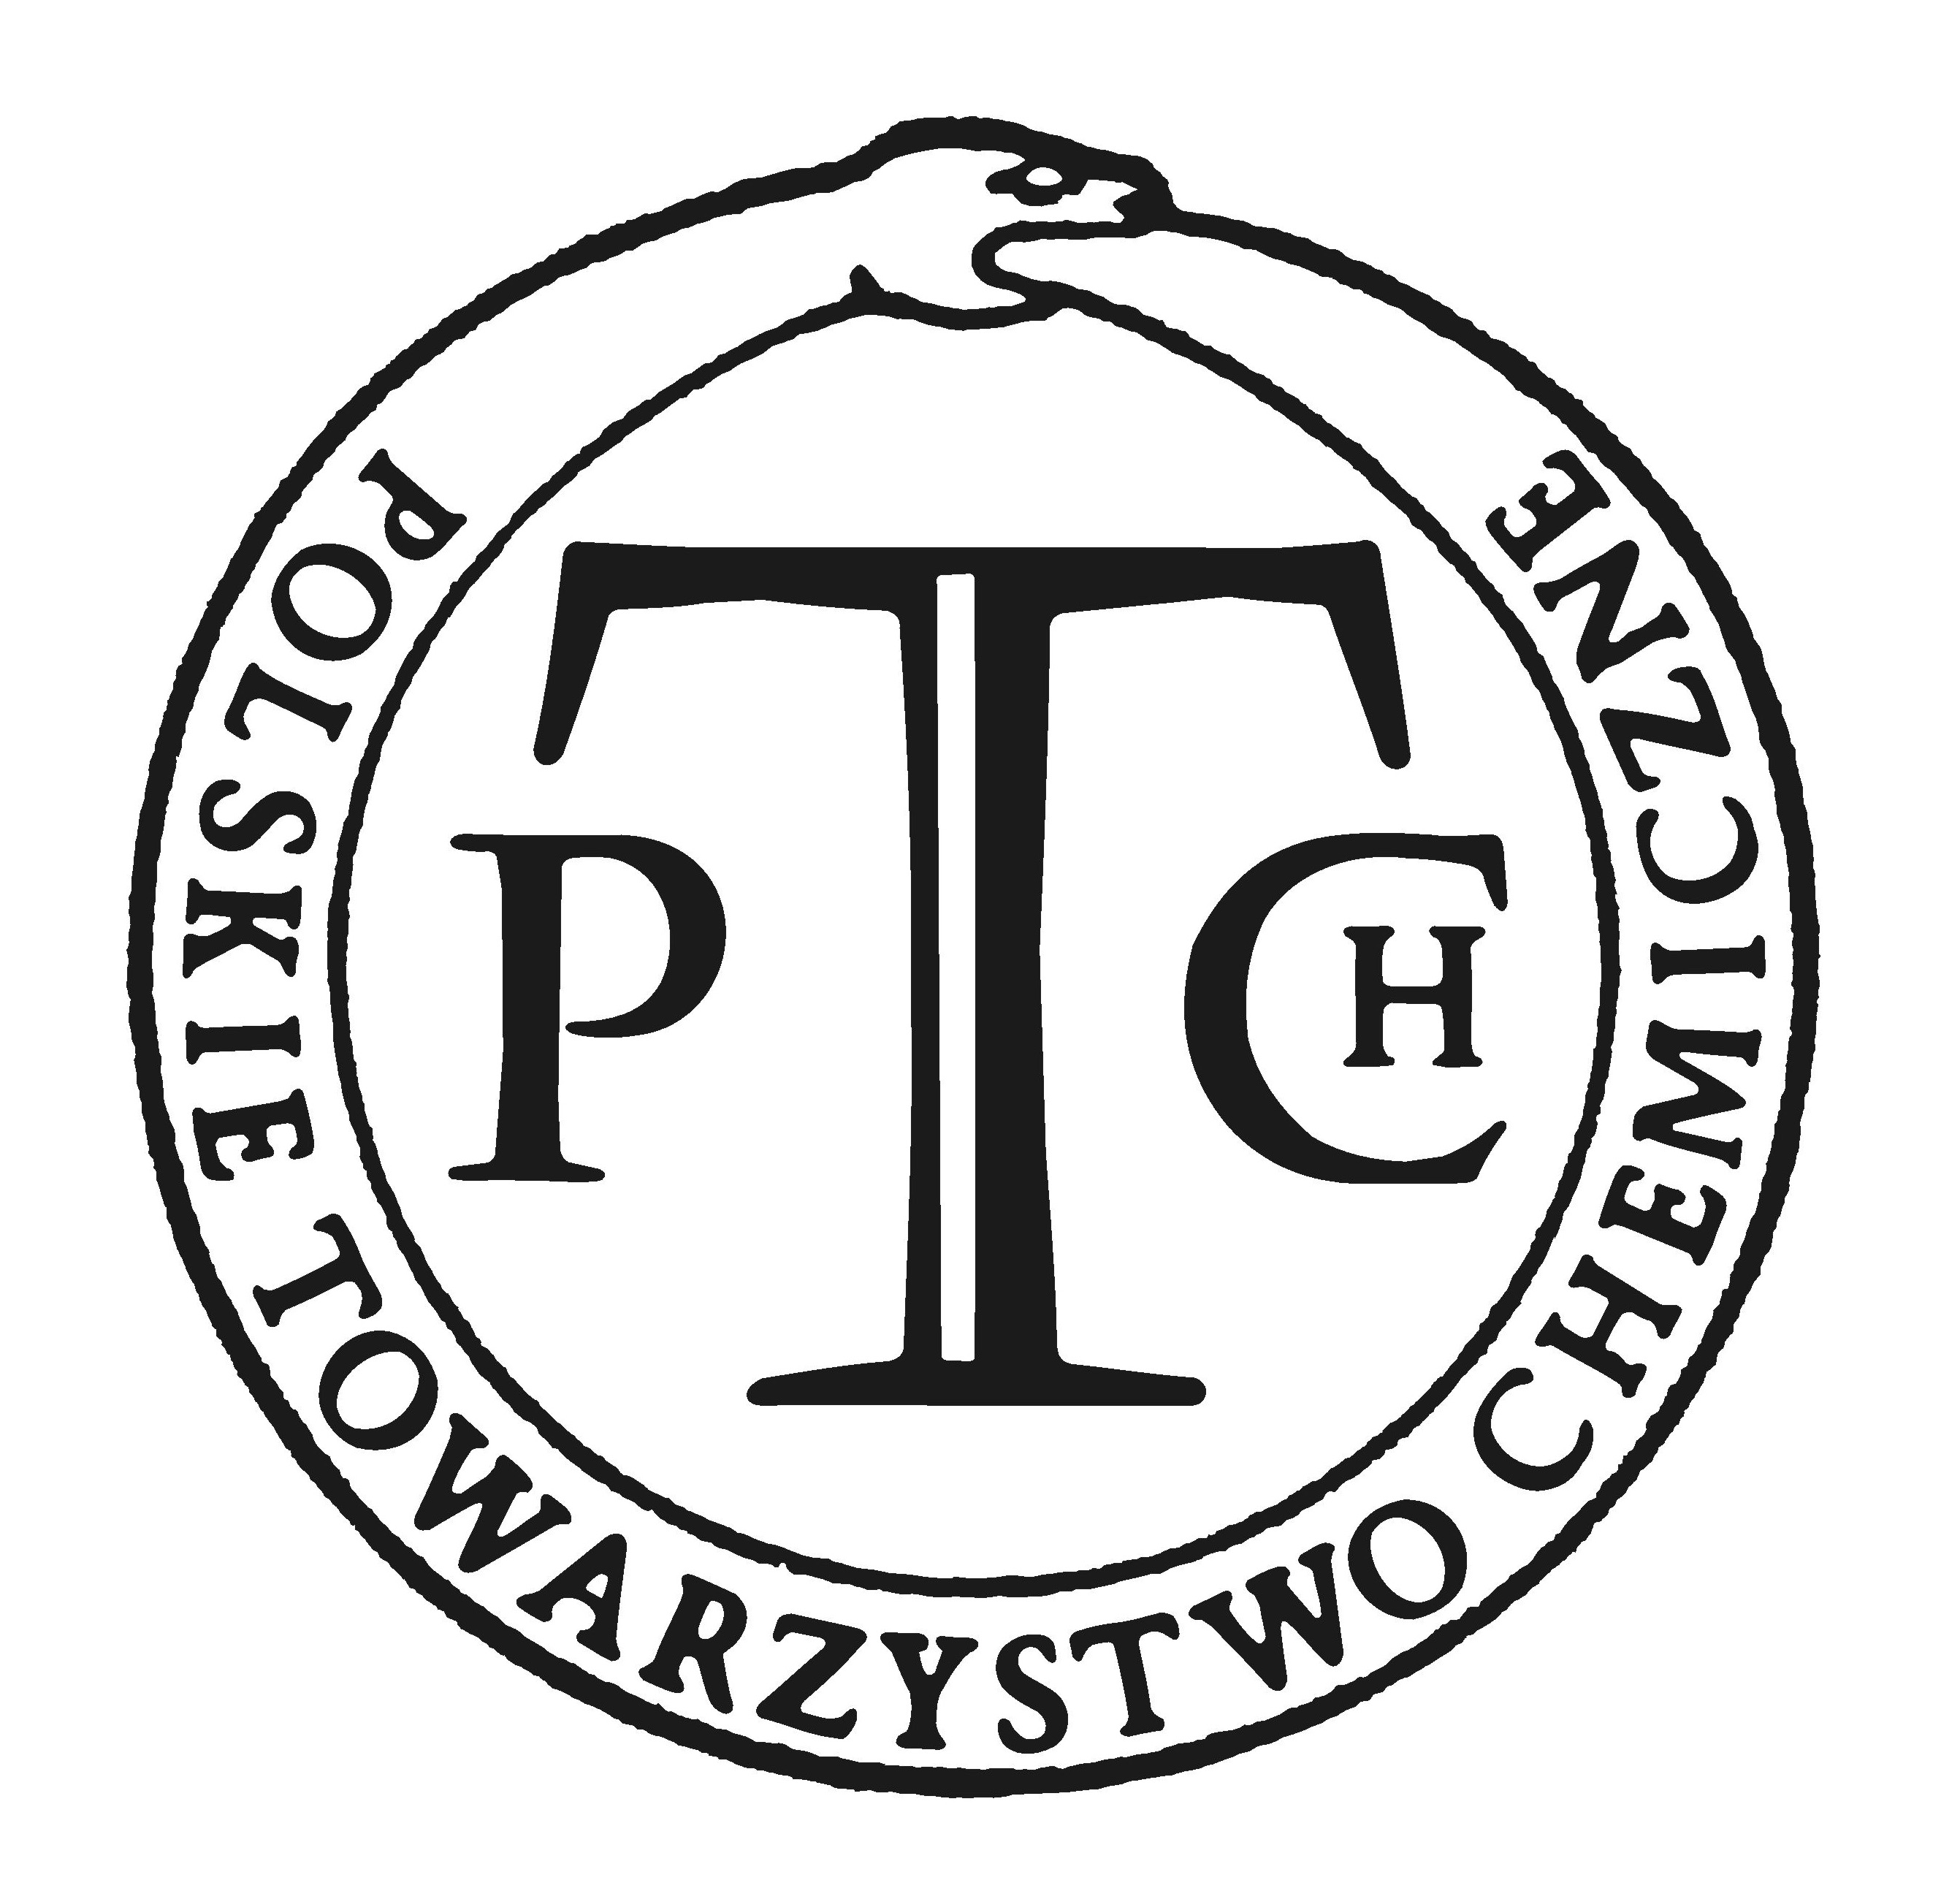 PTChem_logo_2013_czarnyJPG.jpg